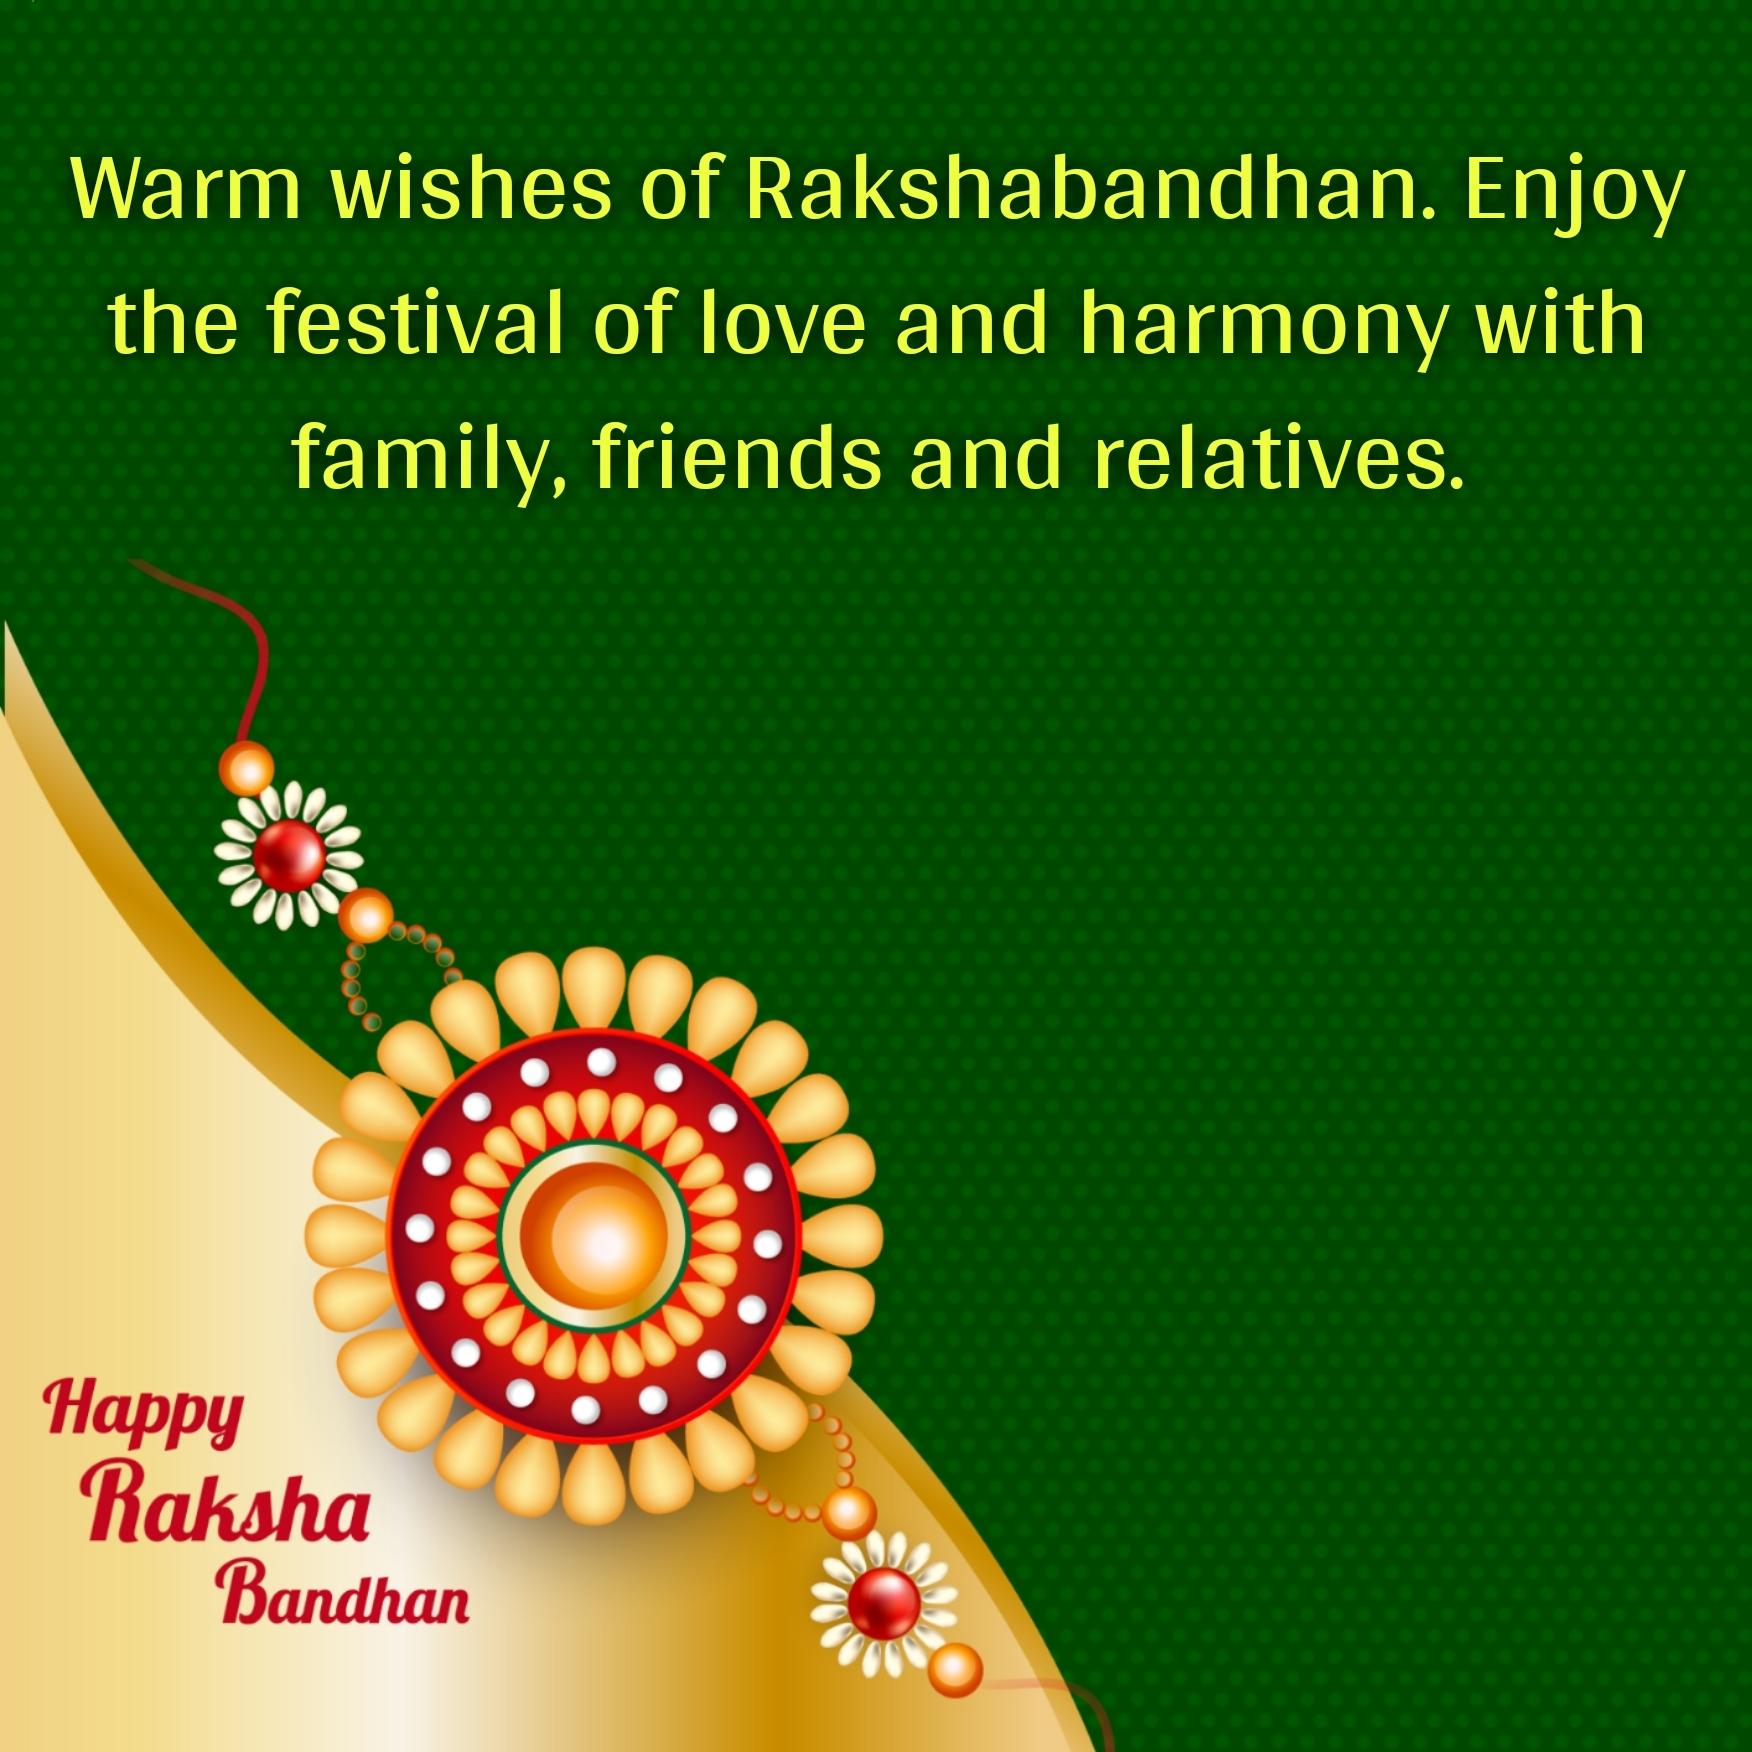 Warm wishes of Rakshabandhan Enjoy the festival of love